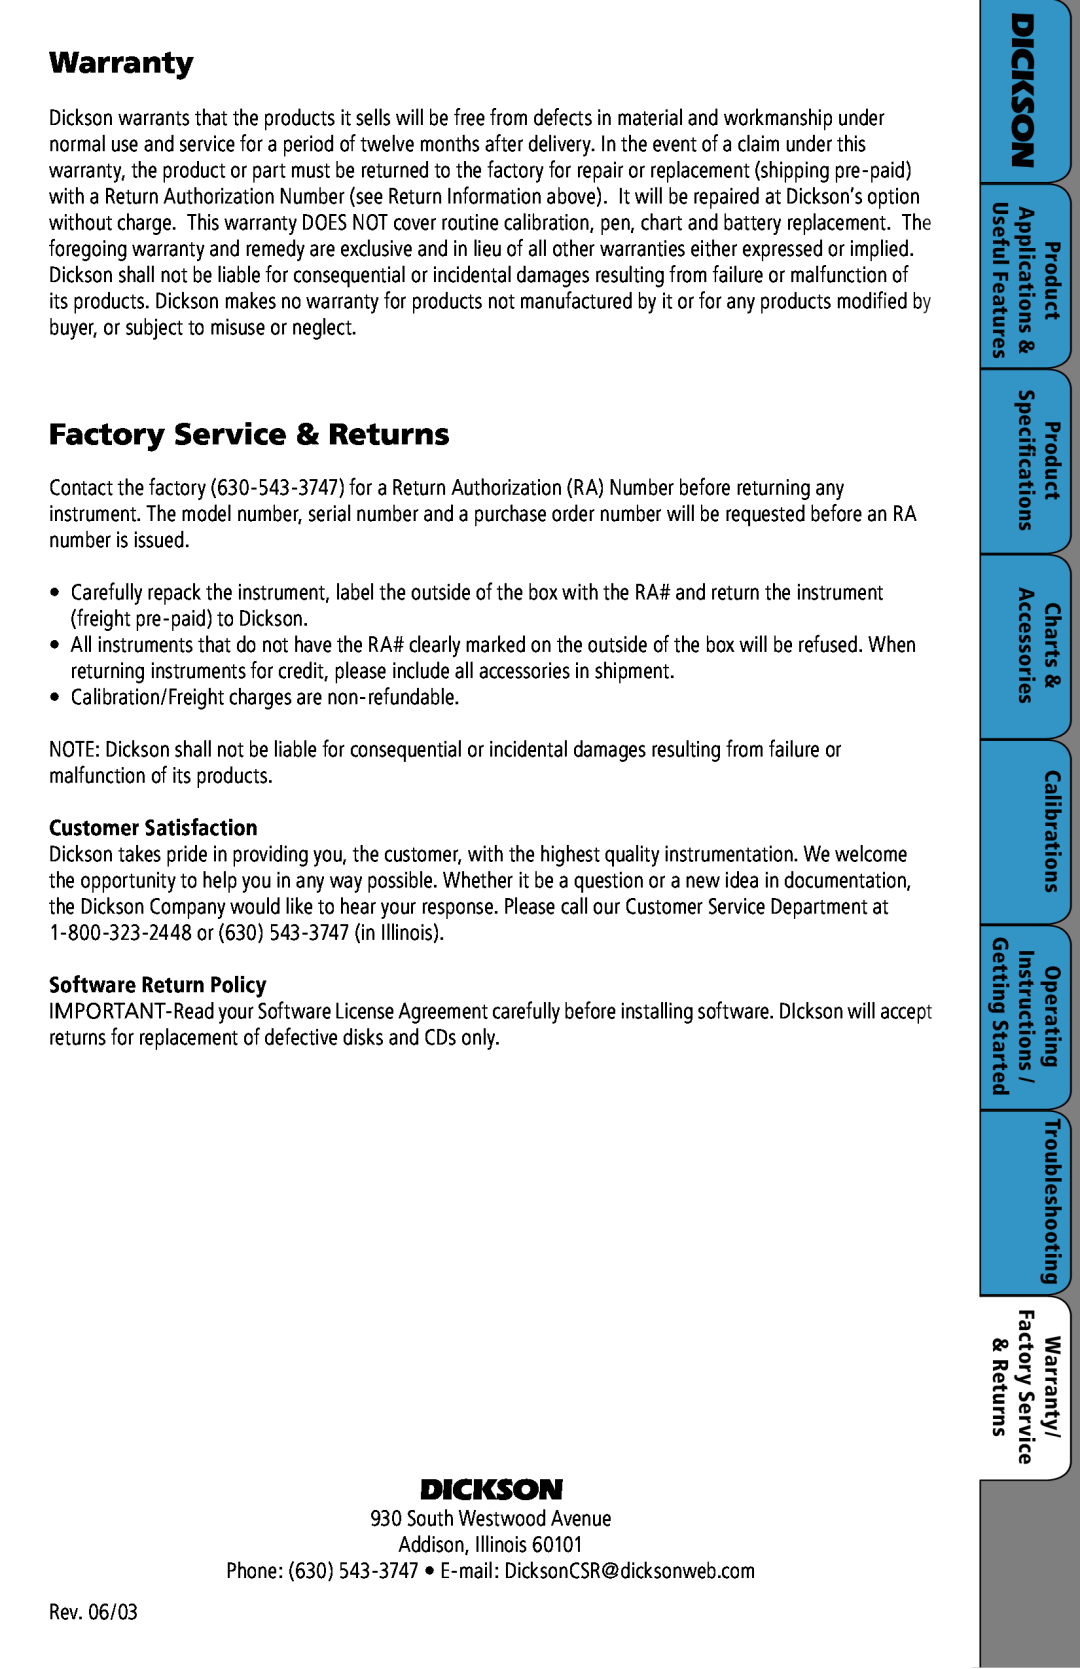 Dickson Industrial SC3 Warranty, Factory Service & Returns, Dickson, Customer Satisfaction, Software Return Policy, Charts 